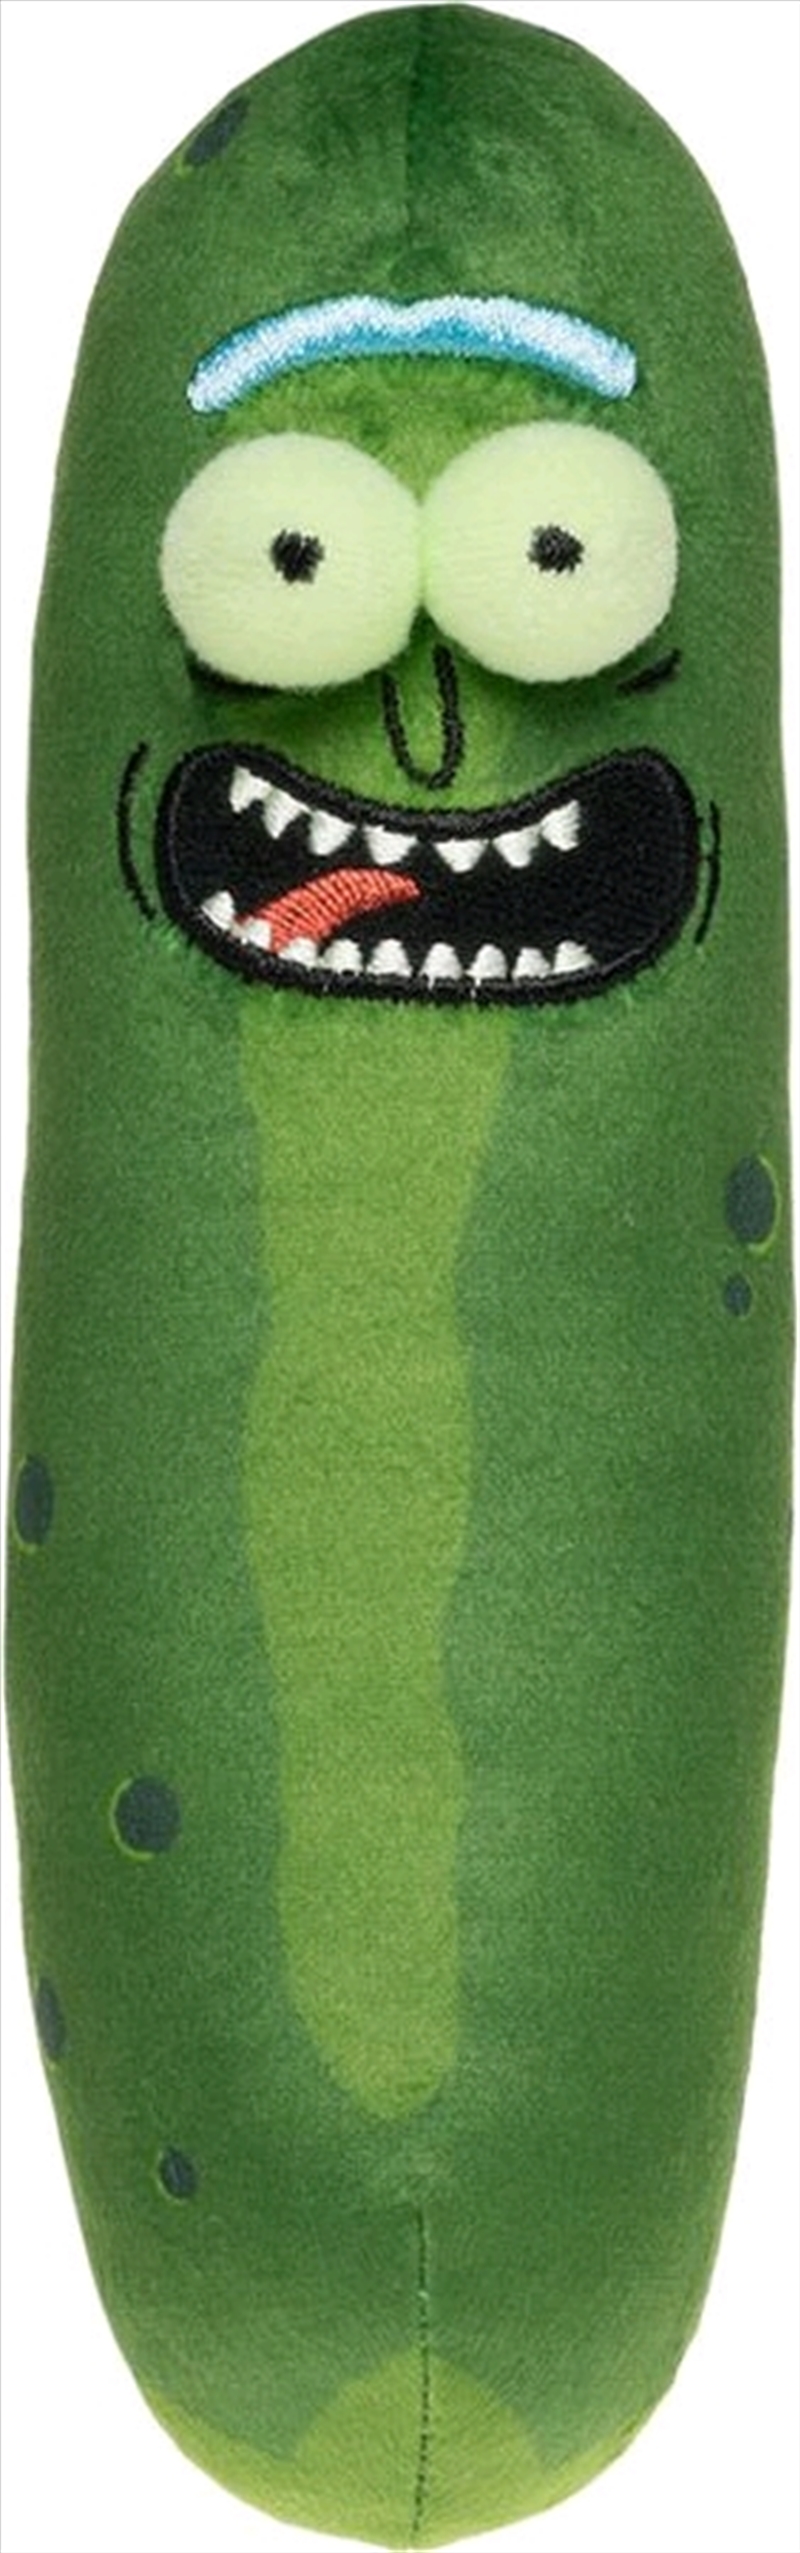 Rick and Morty - Pickle Rick Smiling 7" Plush/Product Detail/Plush Toys